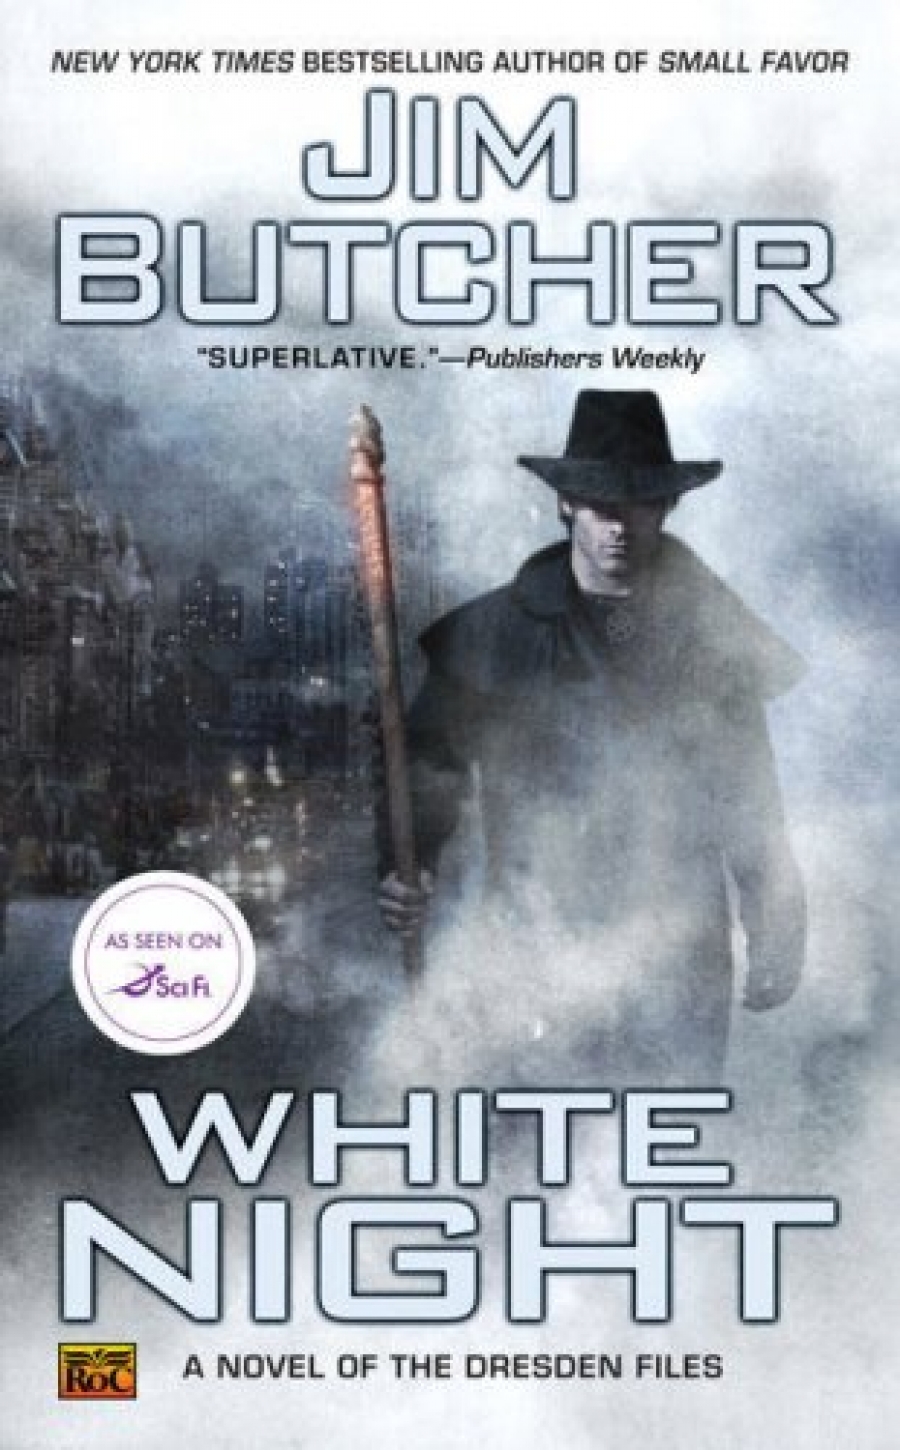 Butcher, Jim Dresden Files 9: White Night 